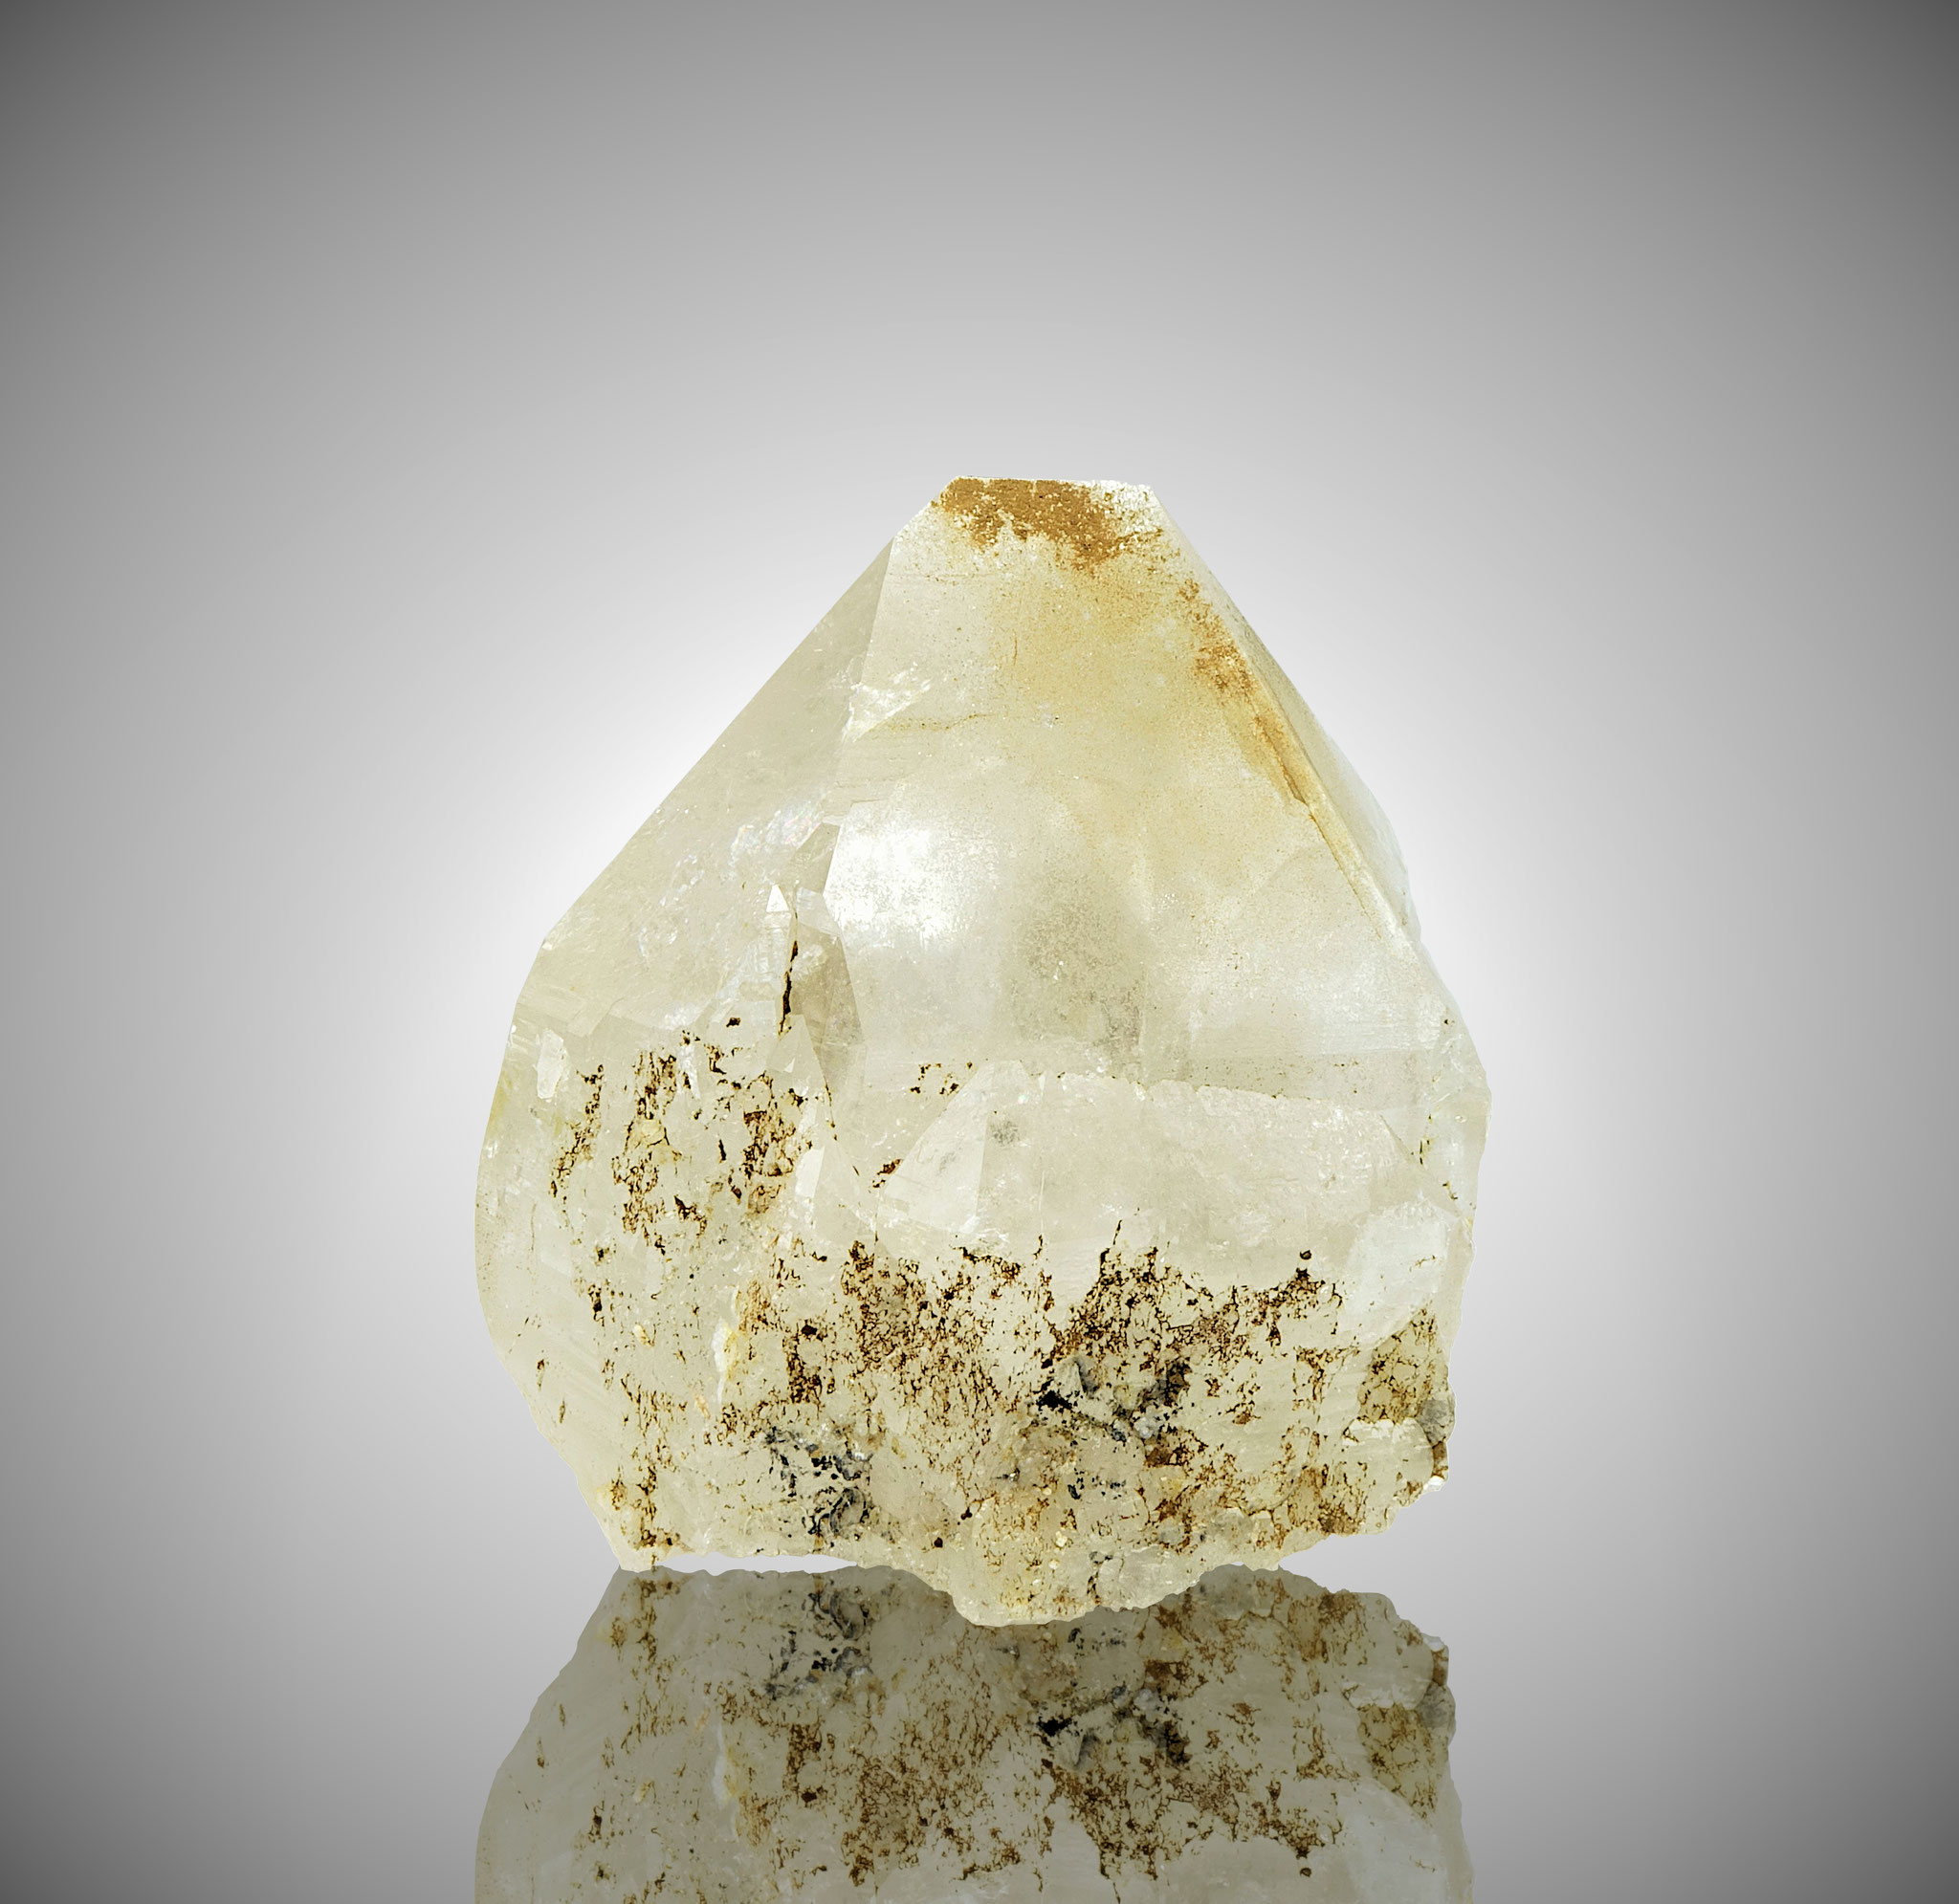 Bergkristall, "Ameliekluft" Lungau 2015, ca. 12 cm